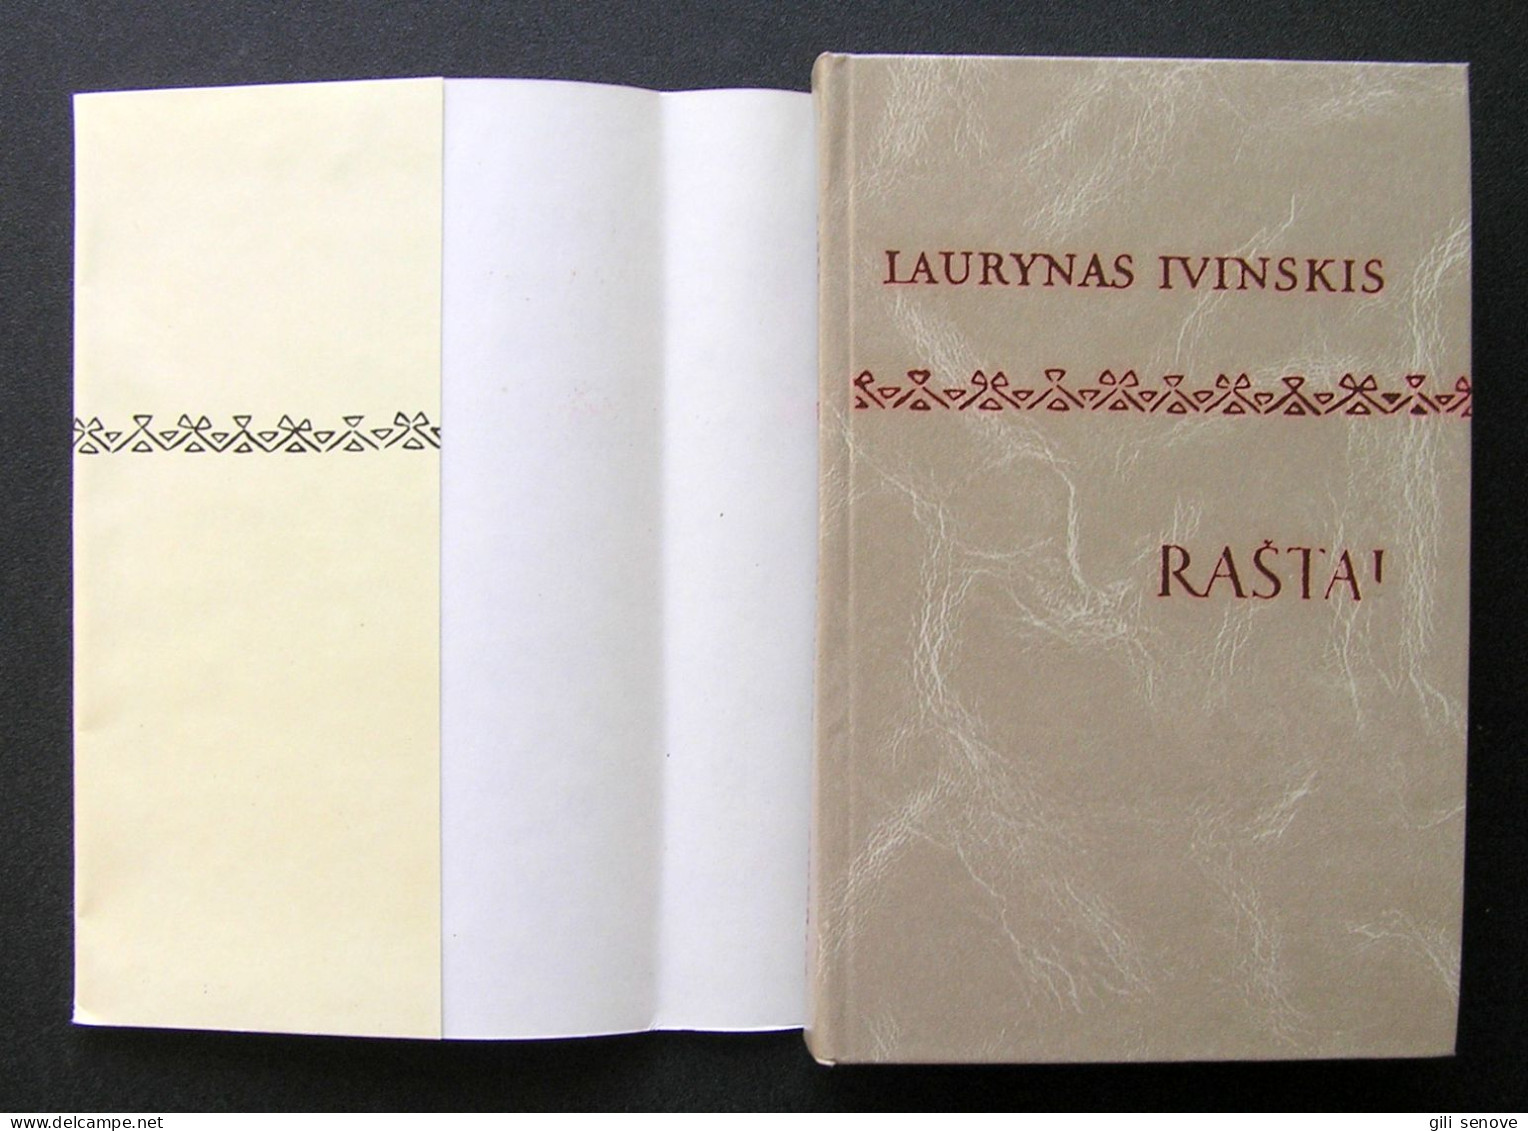 Lithuanian Book / Raštai By Ivinskis 1995 - Cultura